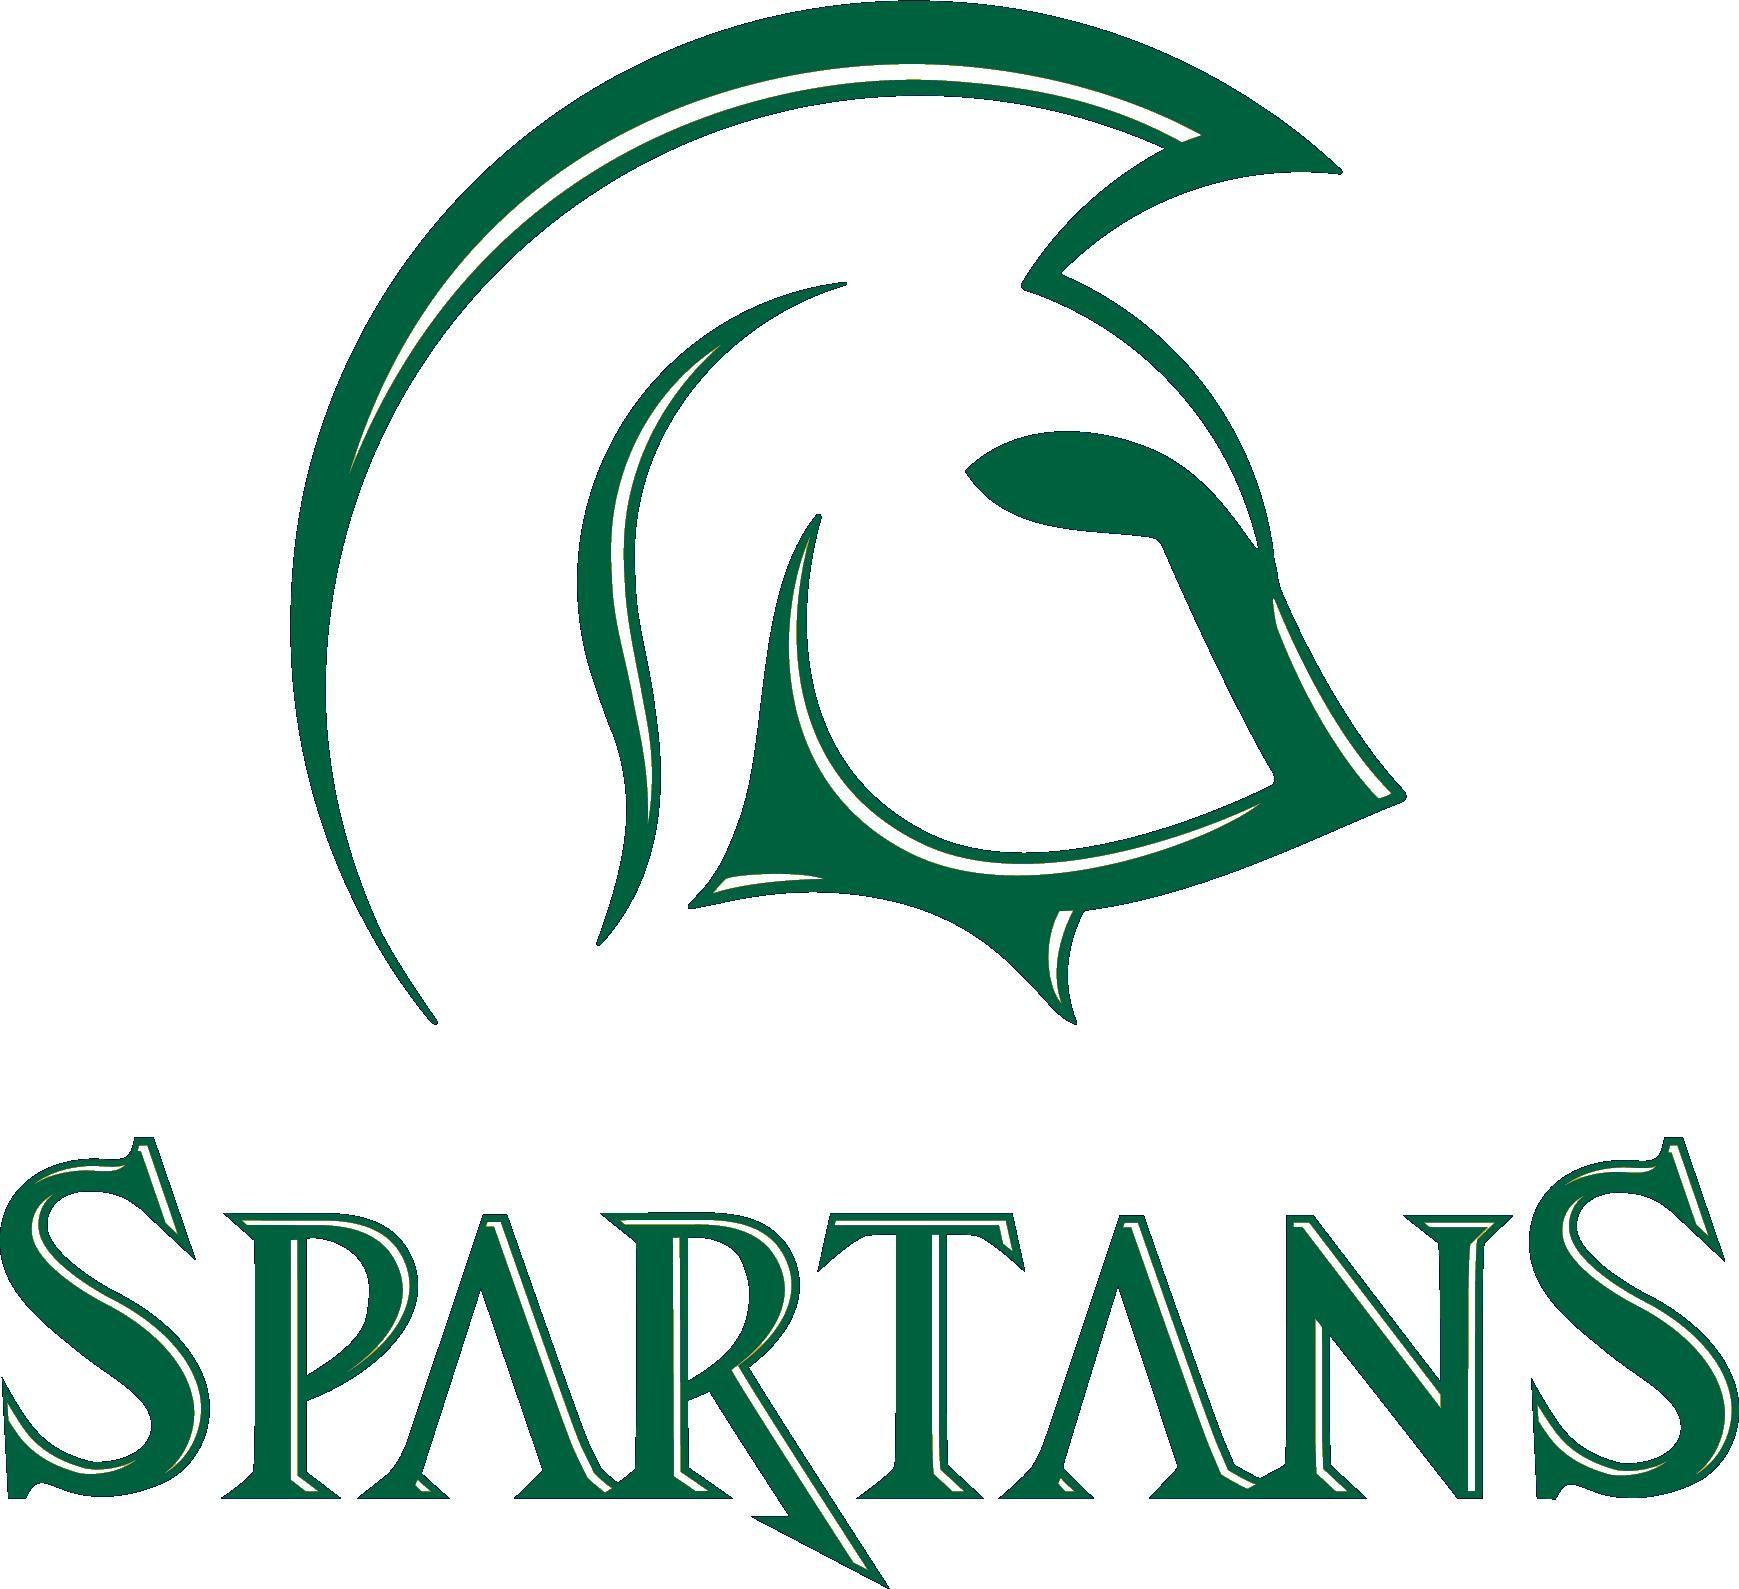 Green Spartan Logo - 2nd Best Spartan Logo?